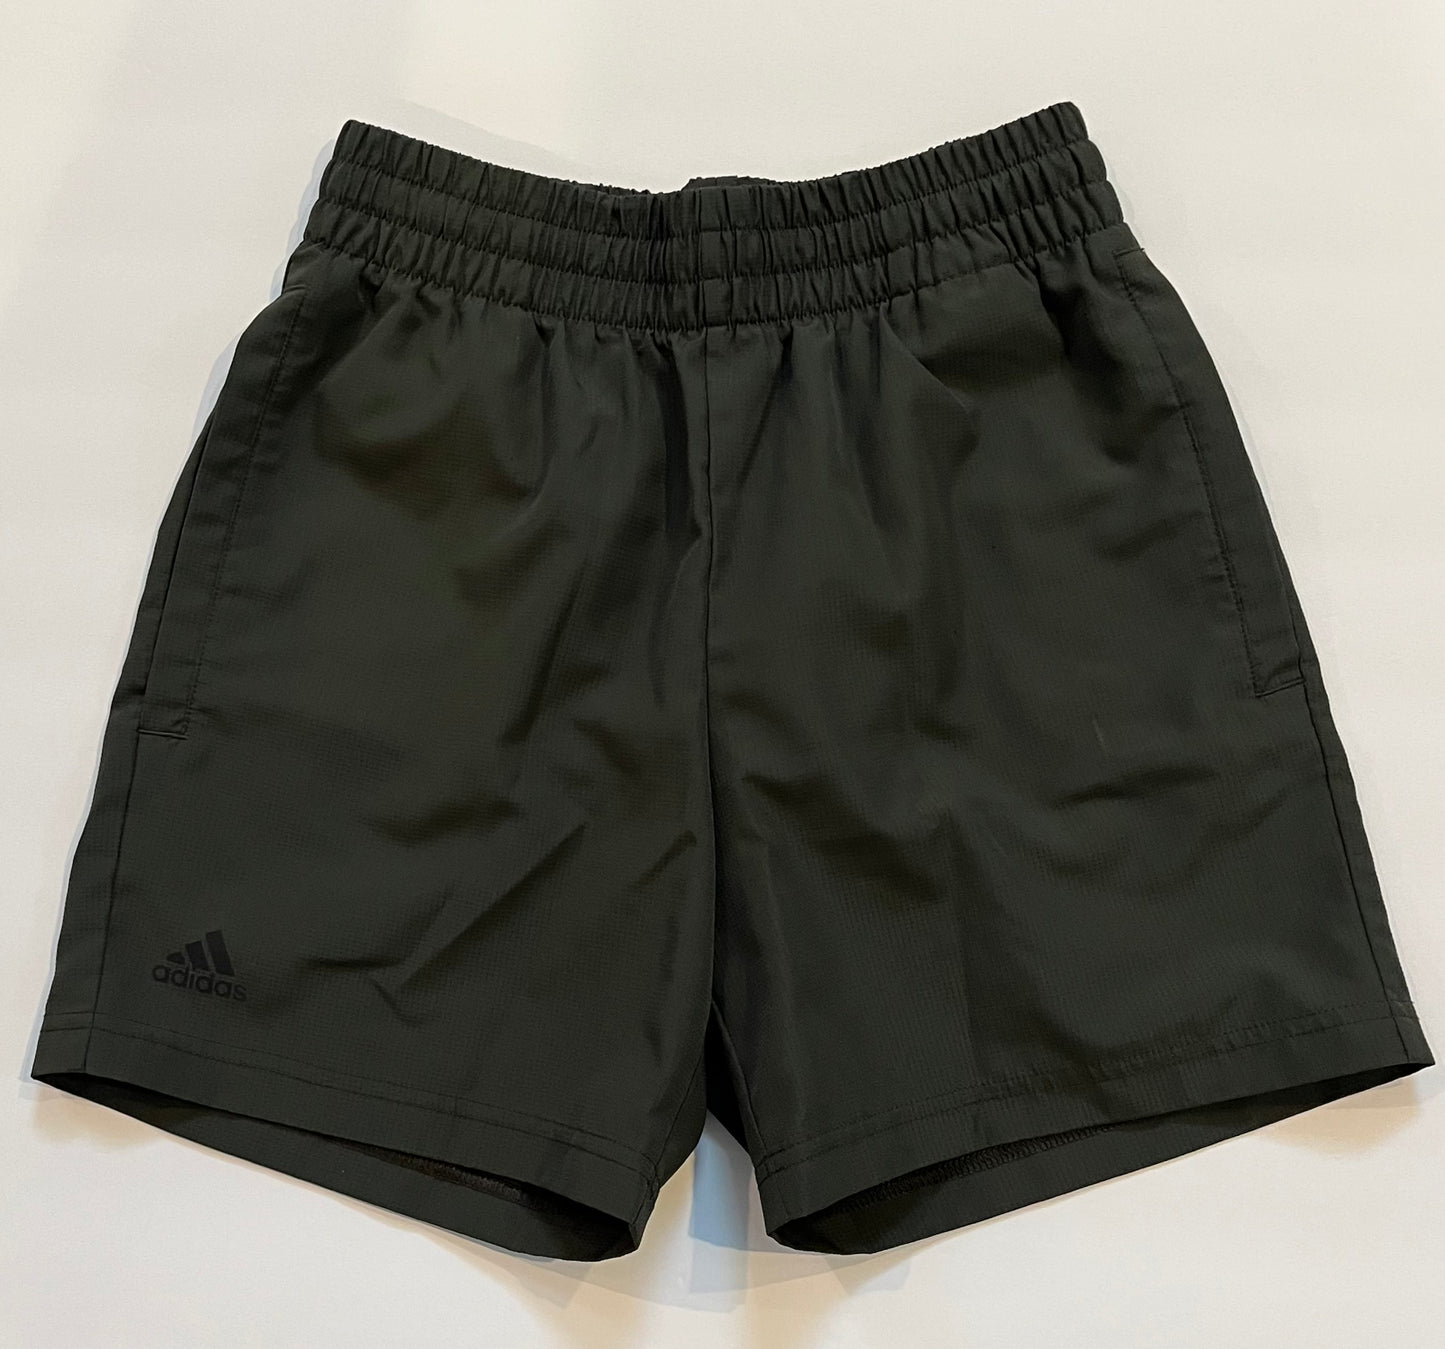 Adidas shorts dark green 11/12